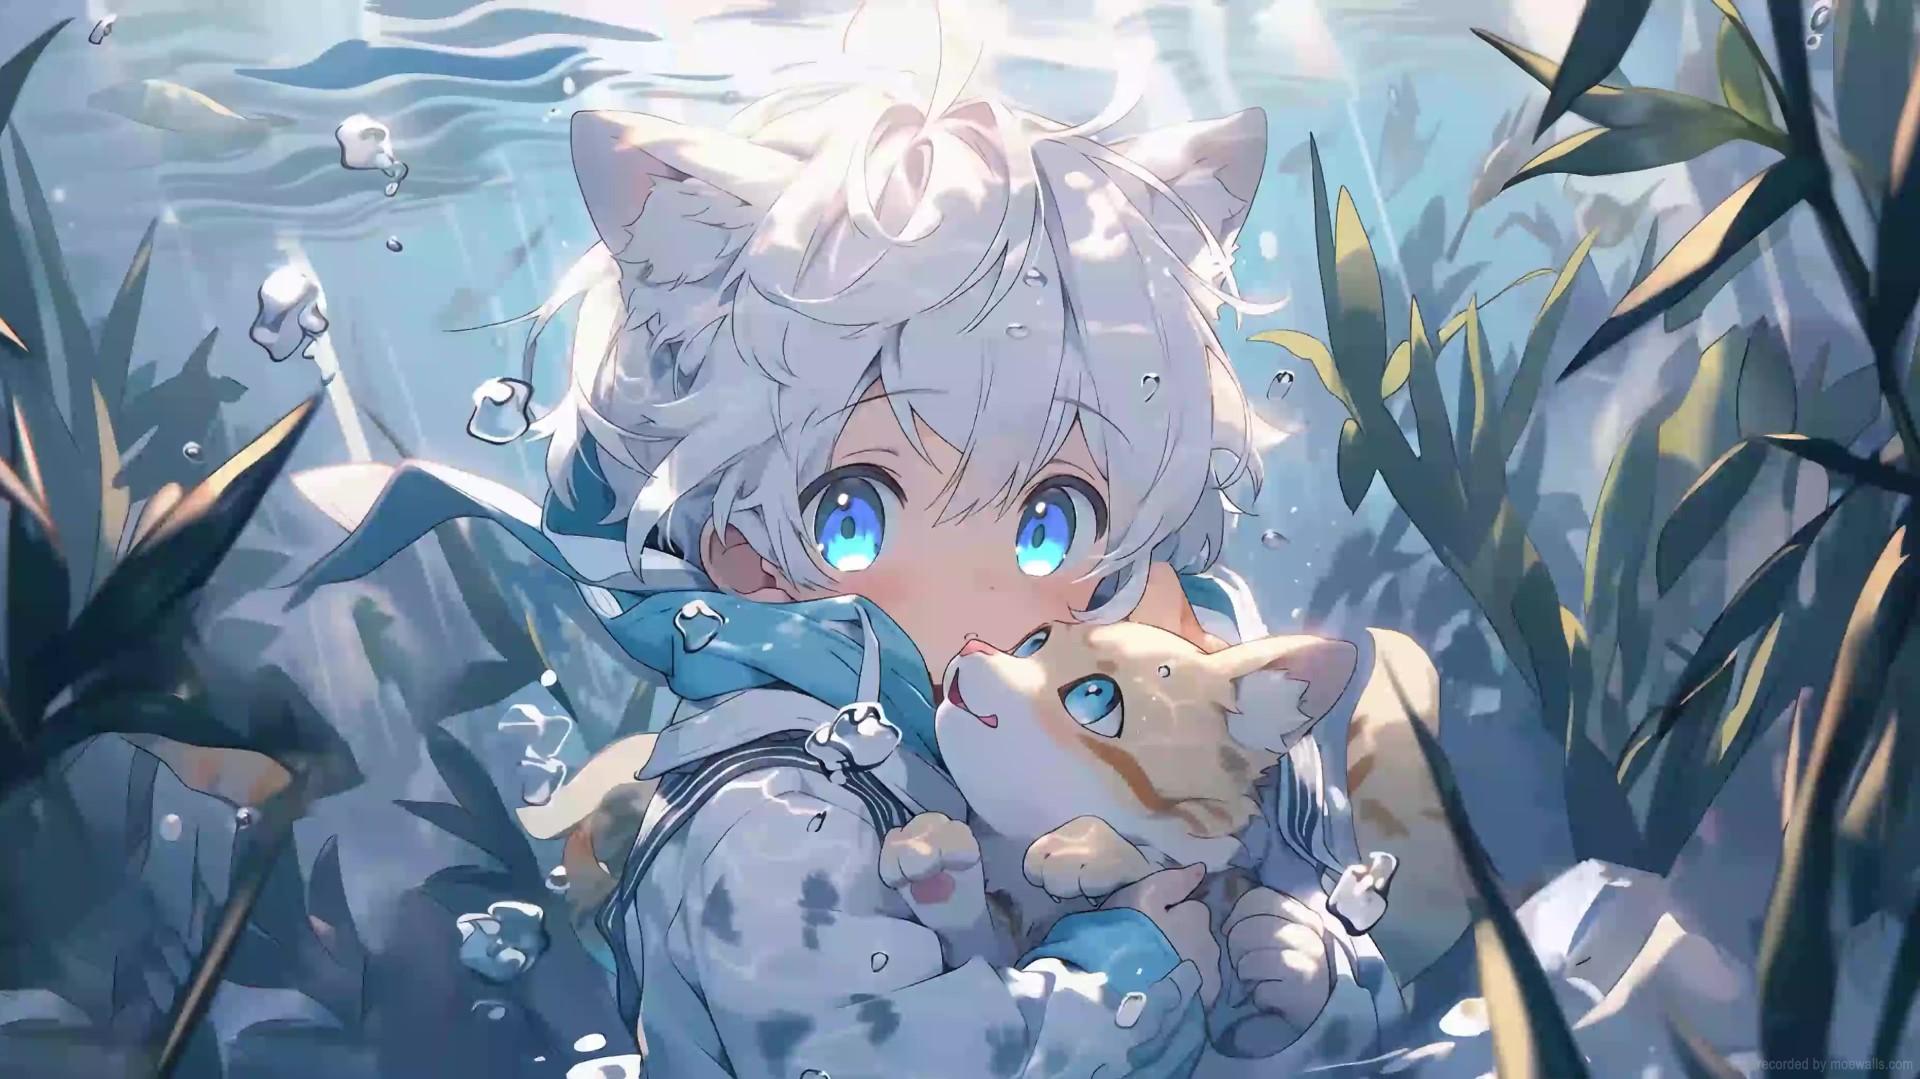 Neko Anime Boy And Cat Underwater Live Wallpaper